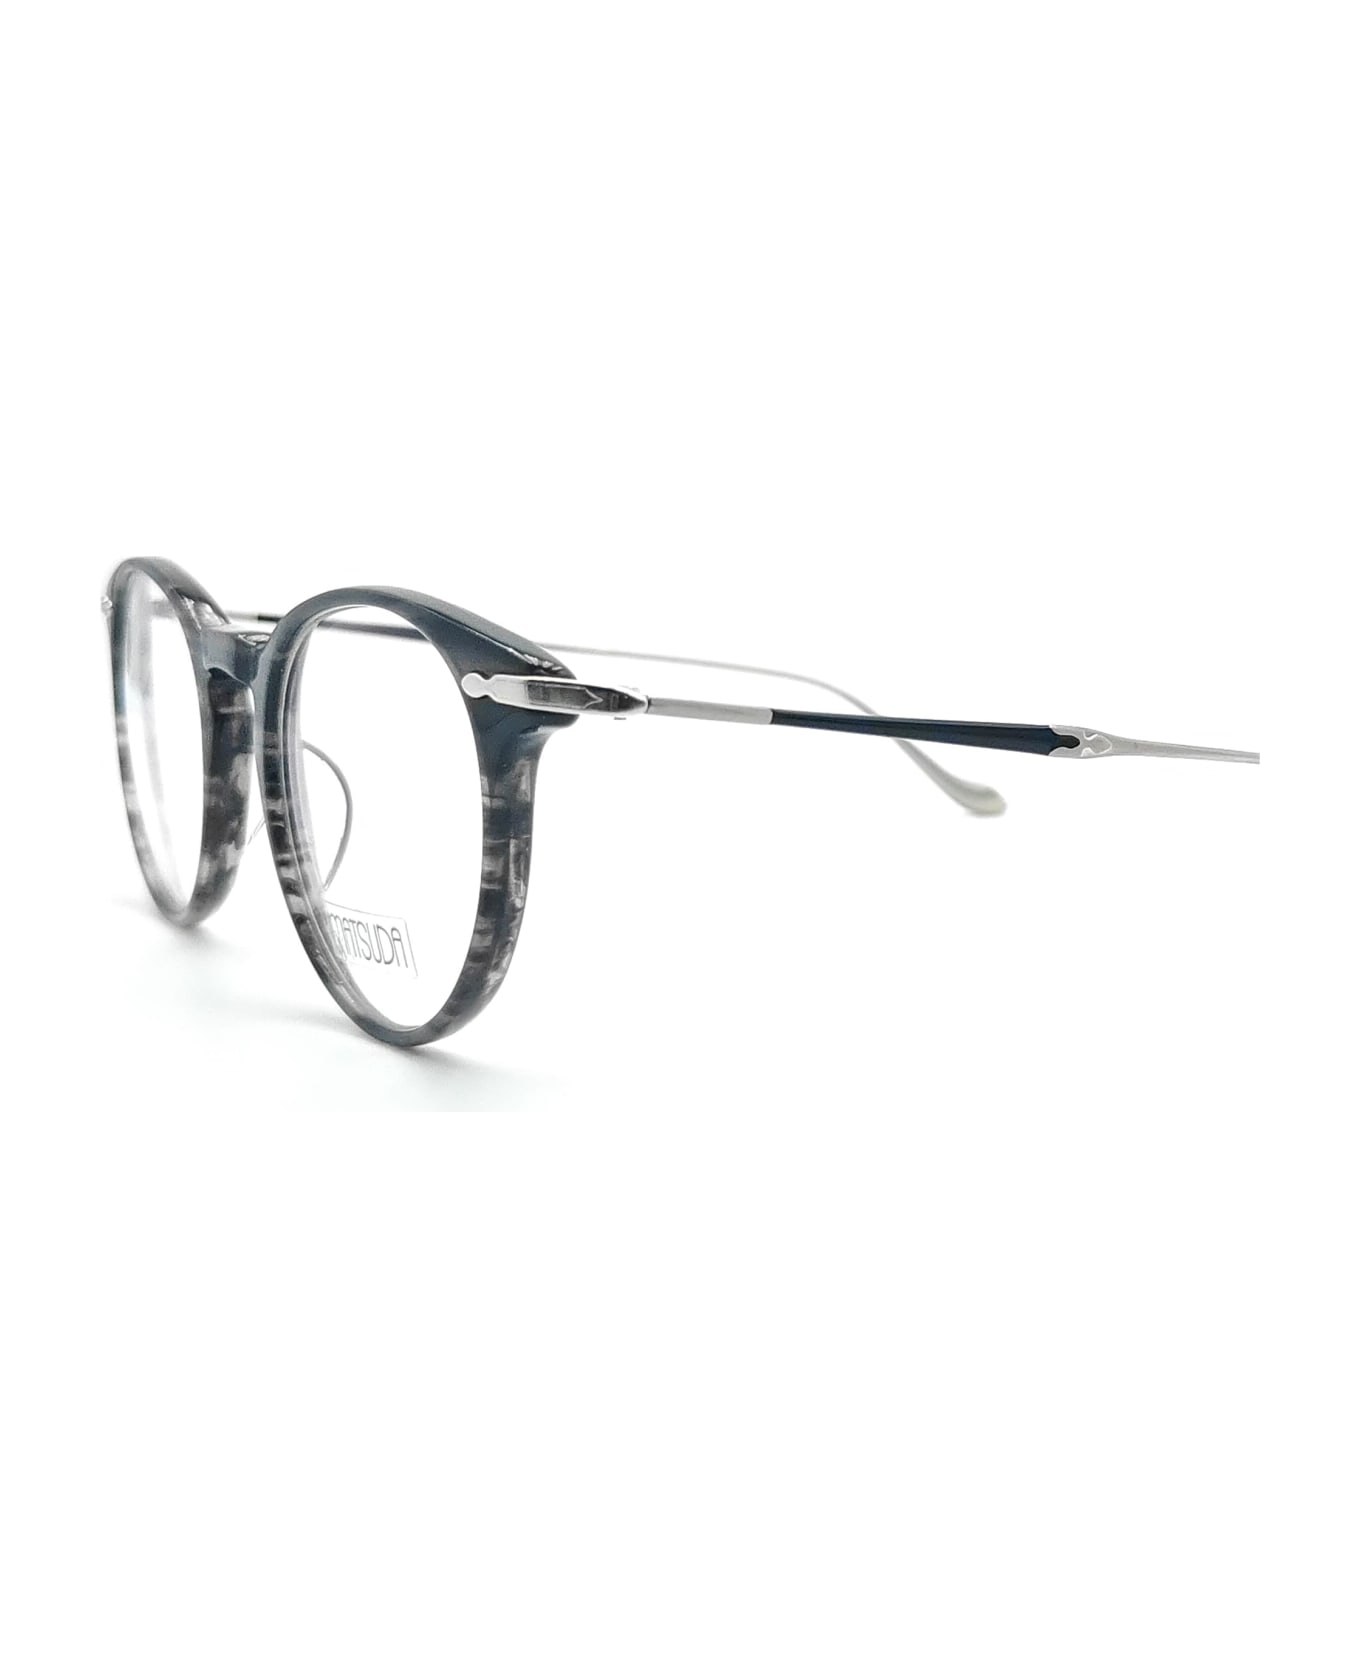 Matsuda M2056 - Black Stripe / Brushed Silver Rx Glasses - black/silver